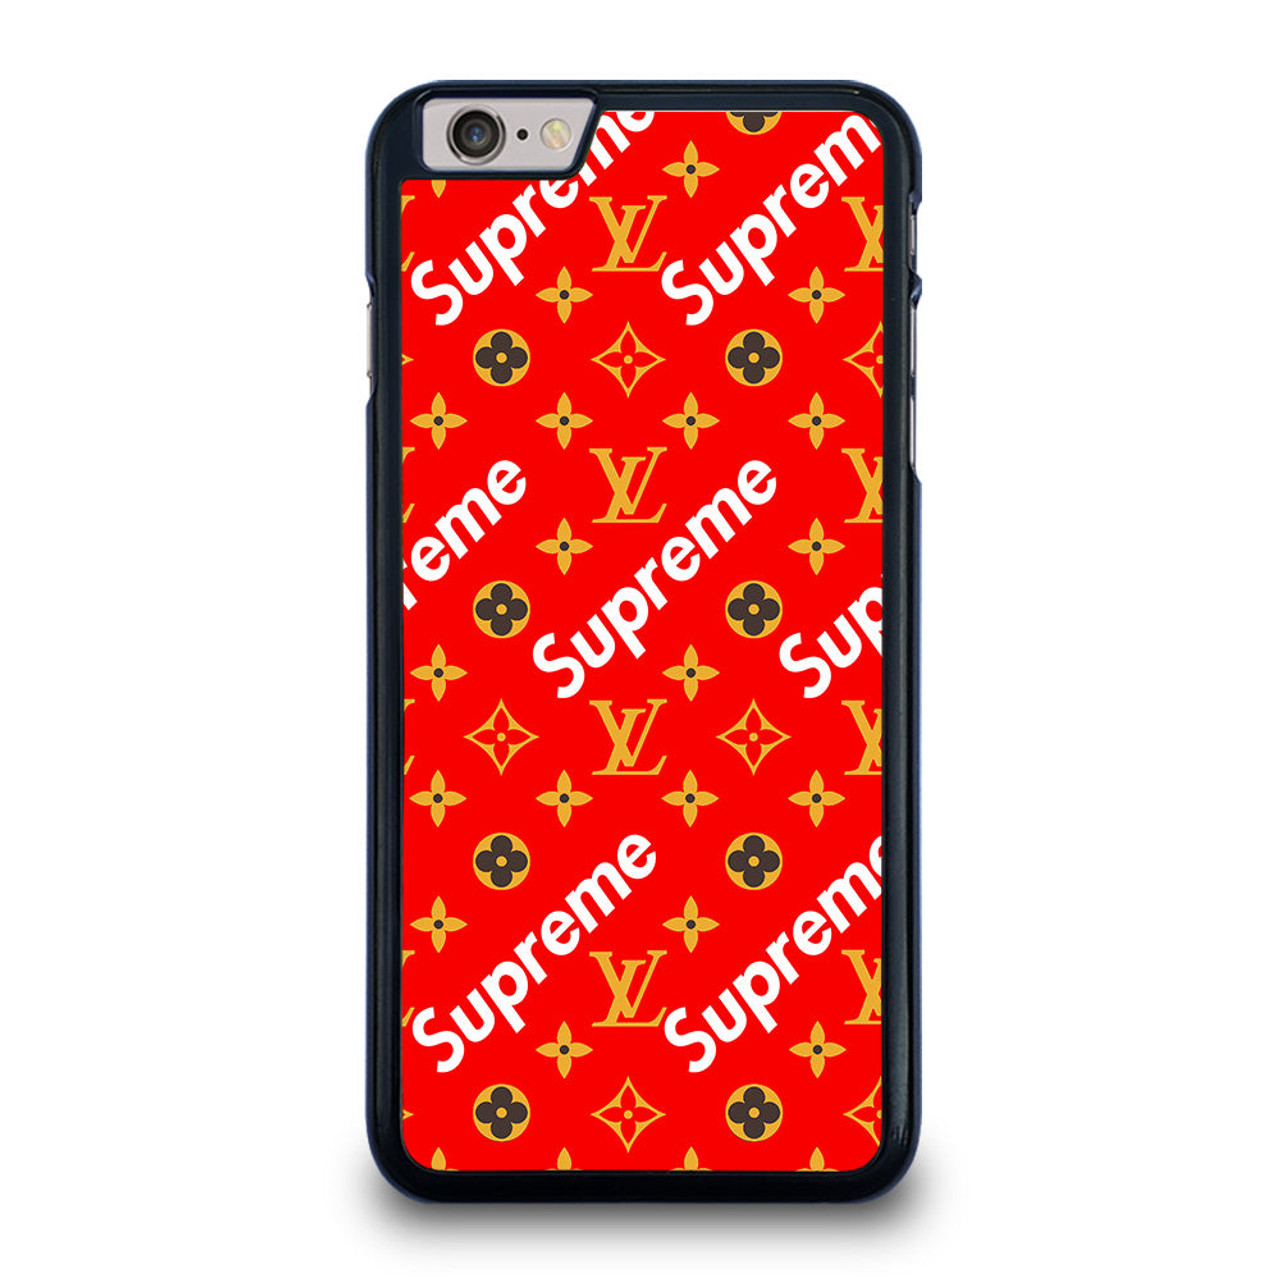 Moet slecht humeur kiespijn NEW SUPREME RED GOLD PATTERN iPhone 6 / 6S Plus Case Cover